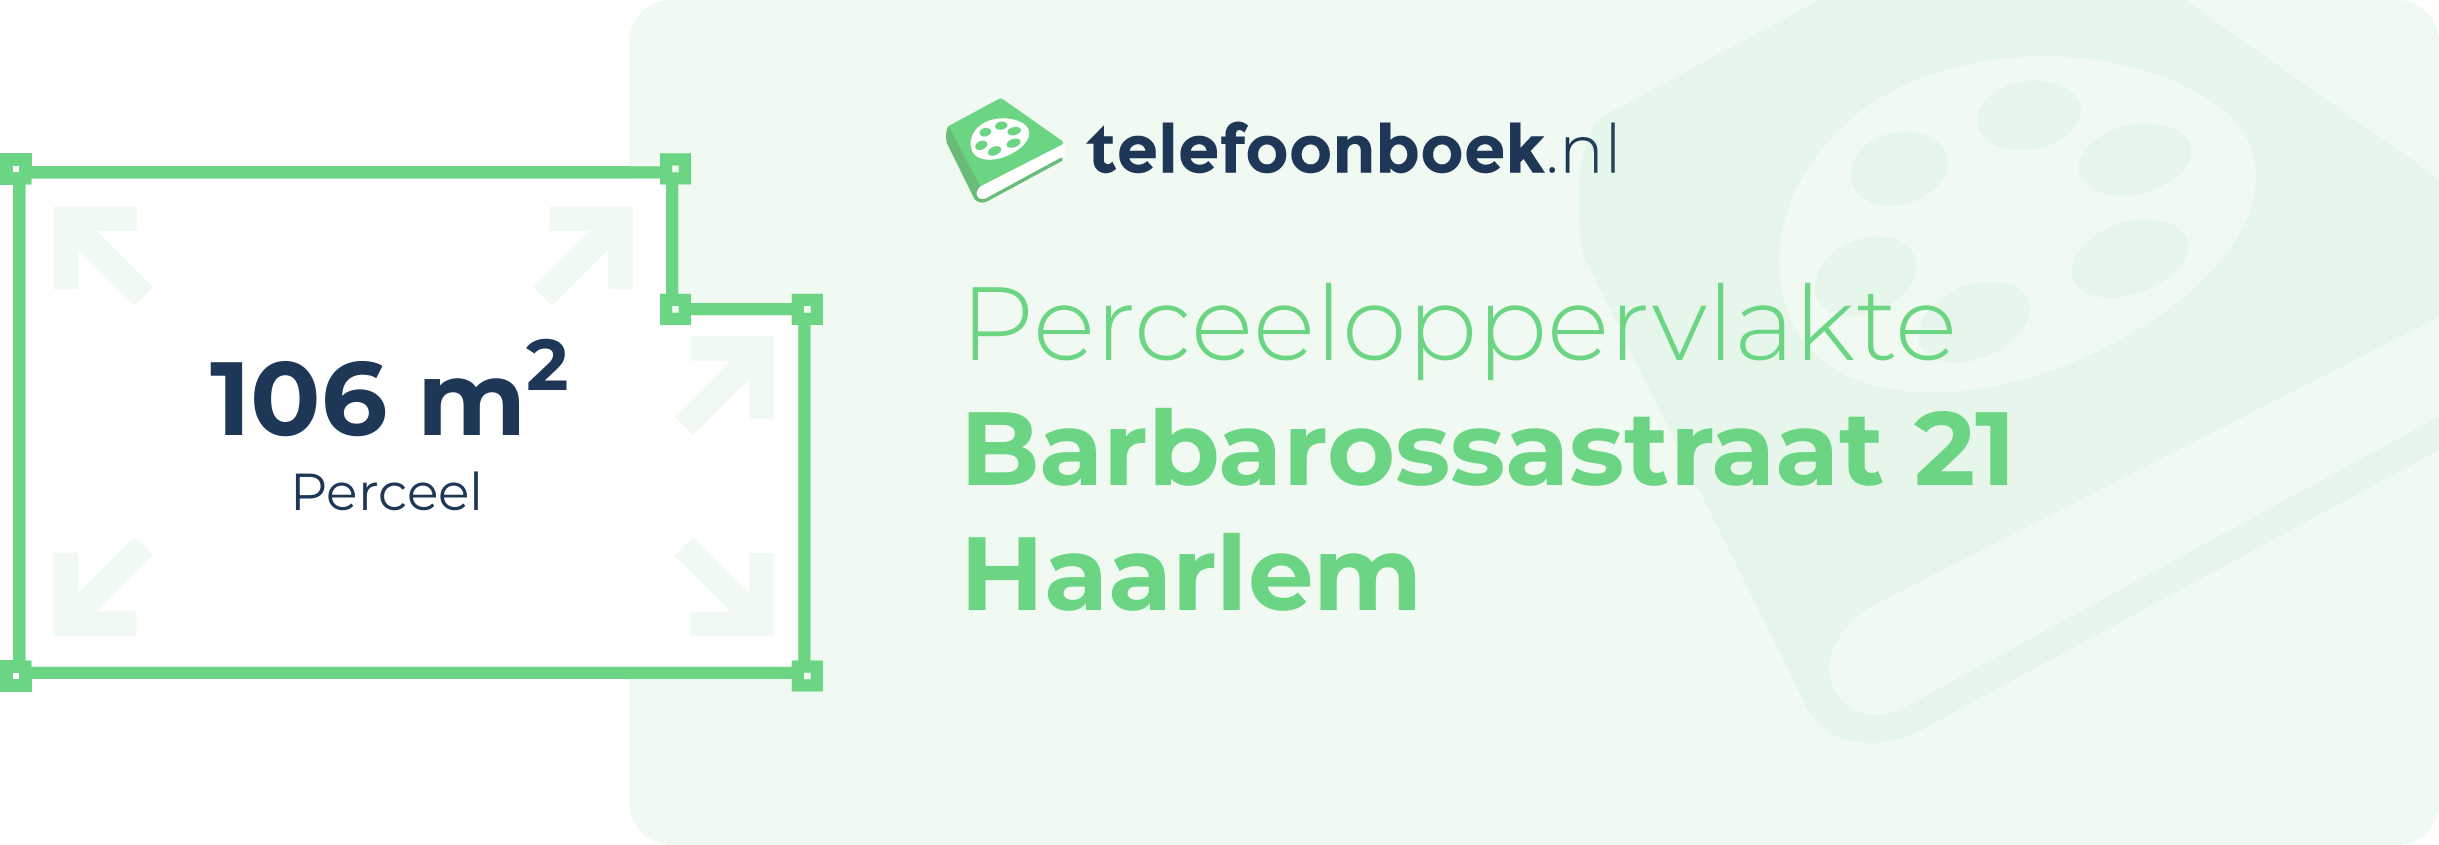 Perceeloppervlakte Barbarossastraat 21 Haarlem